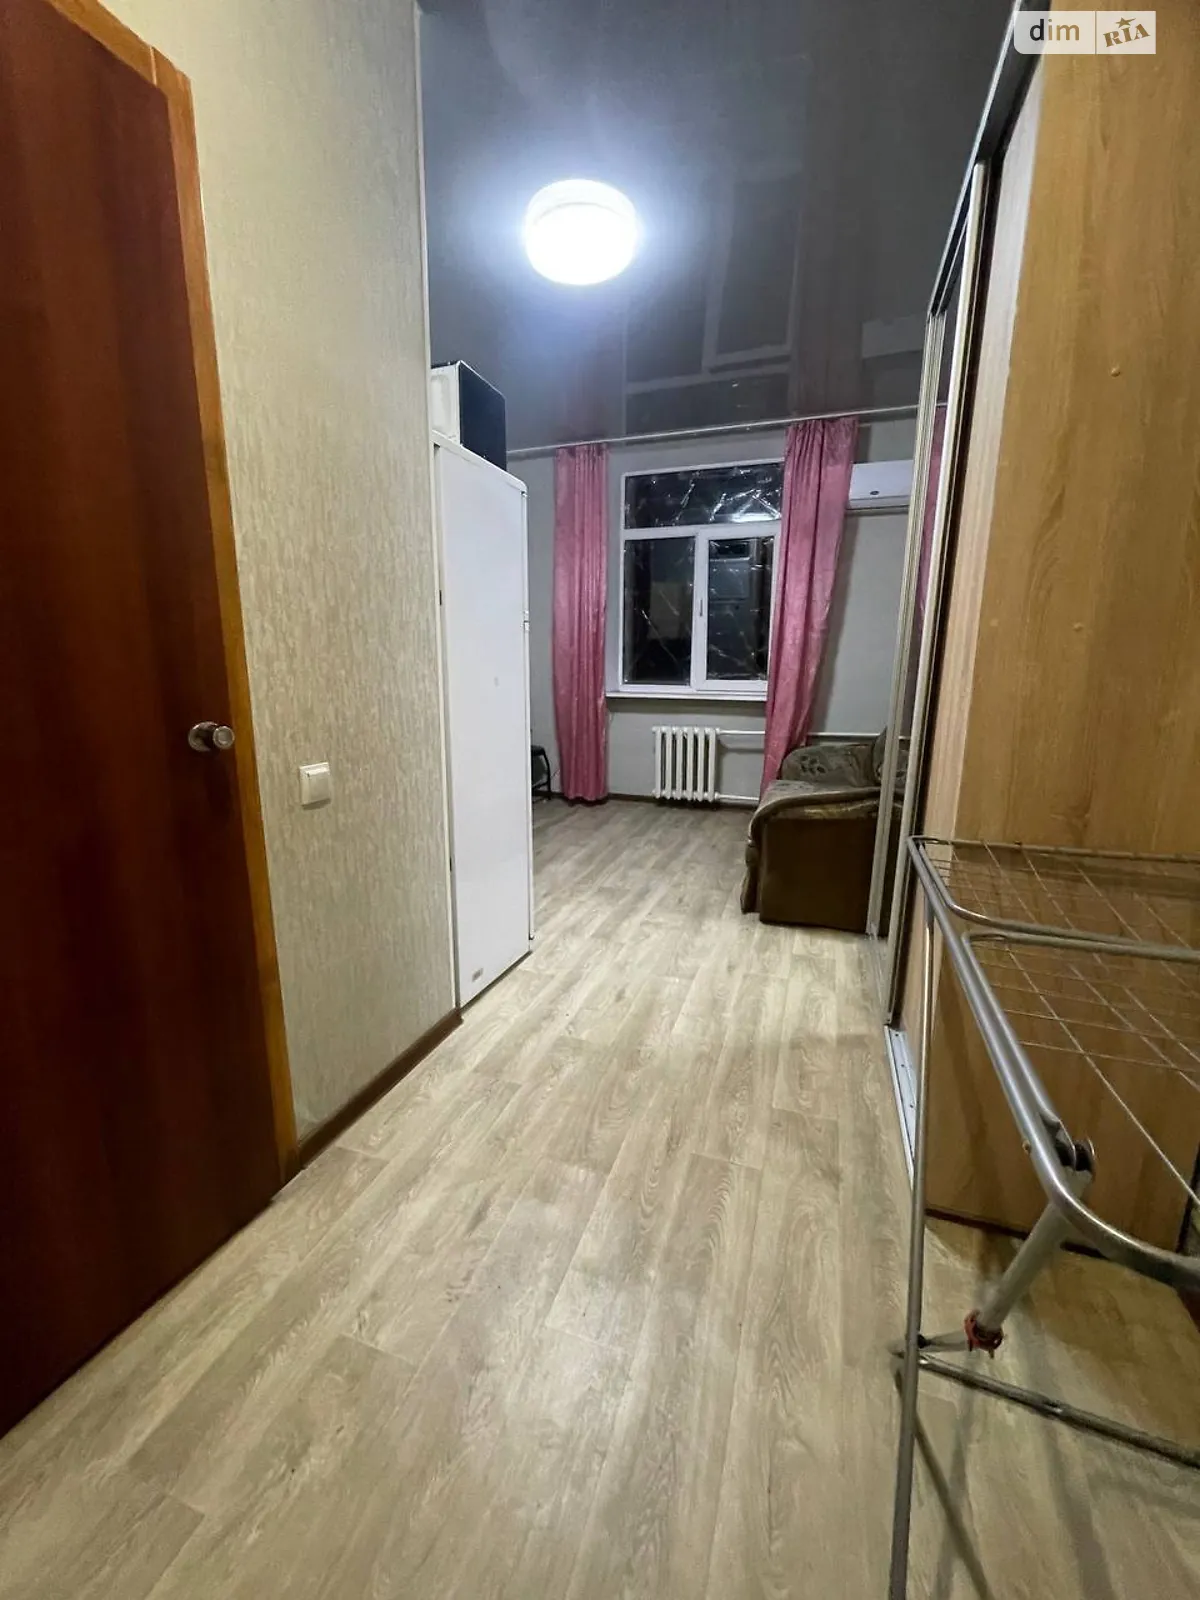 Продается комната 17.5 кв. м в Харькове - фото 3